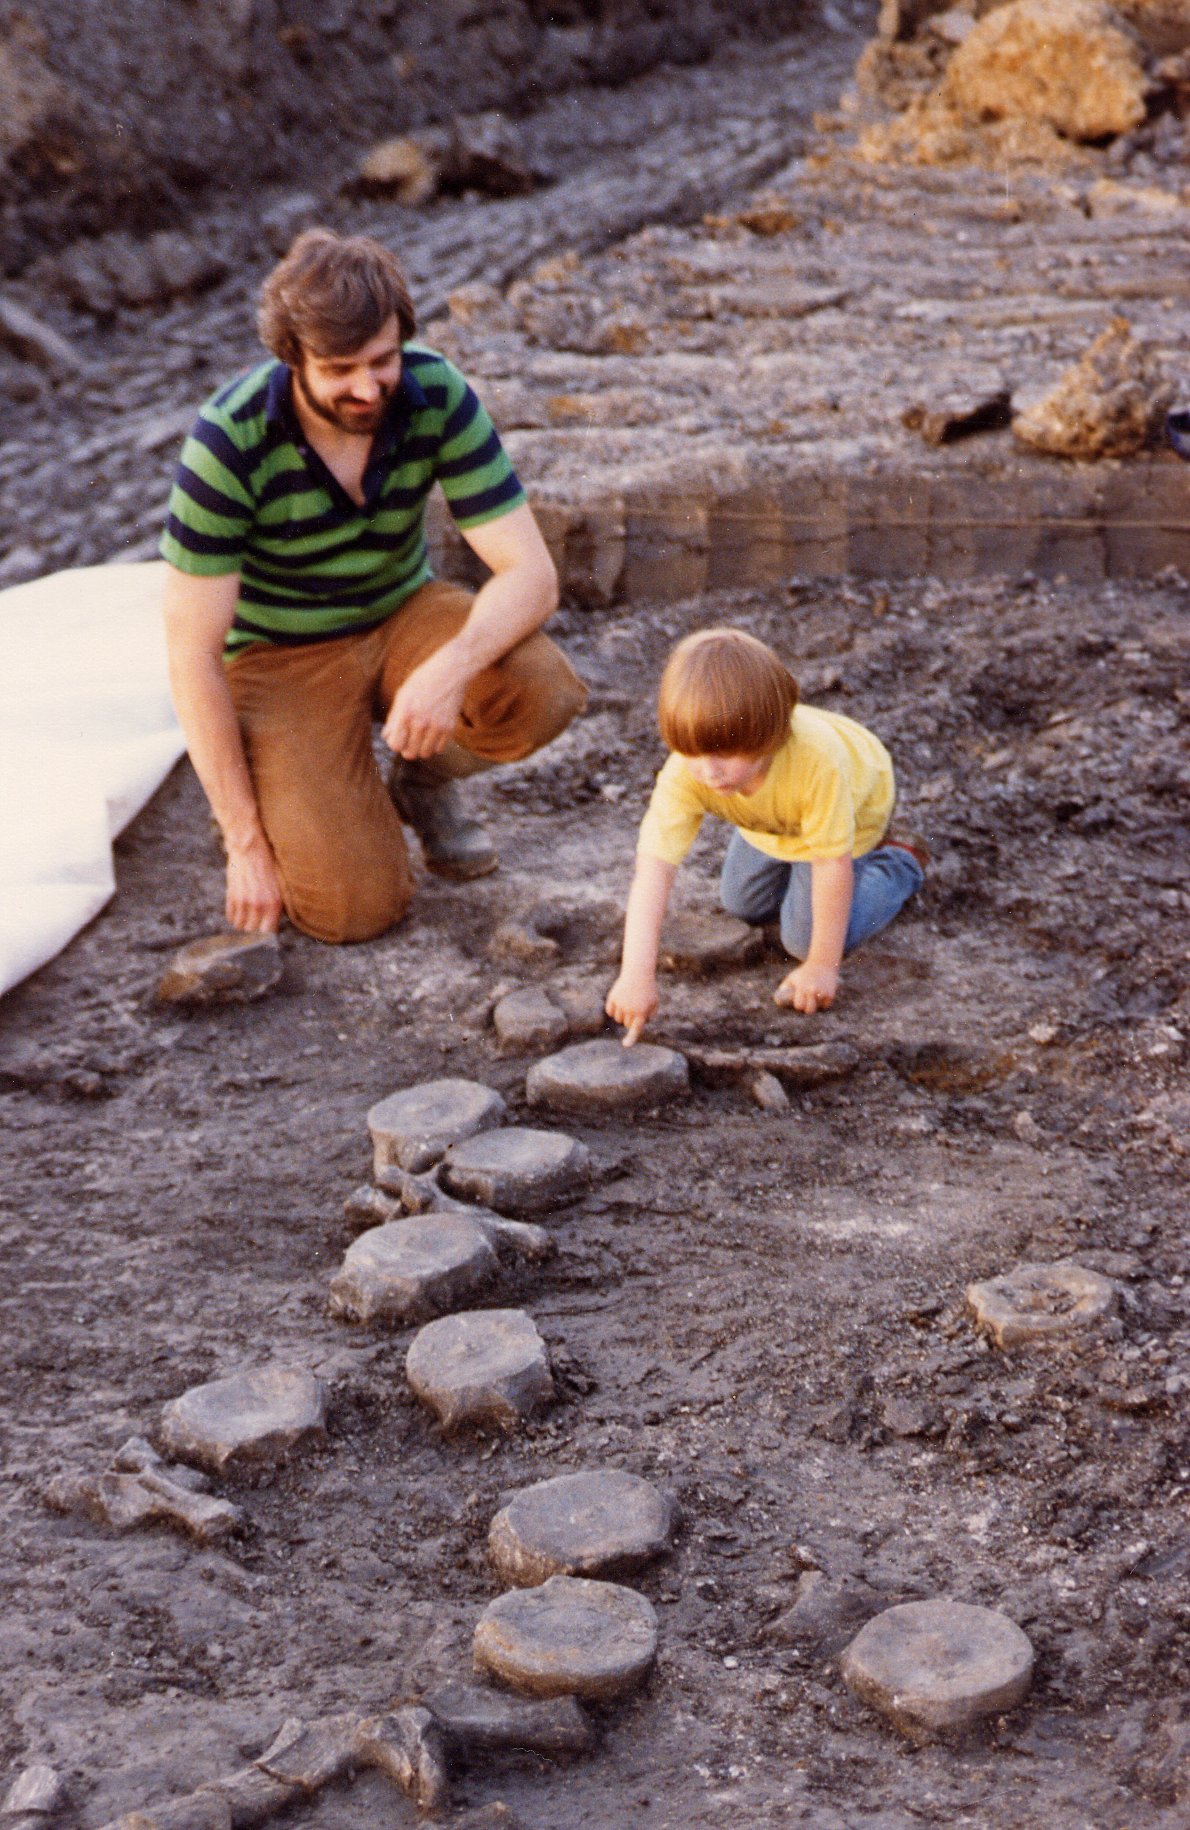 Geologist Michael Oates and his son examine the Pliosaur bones